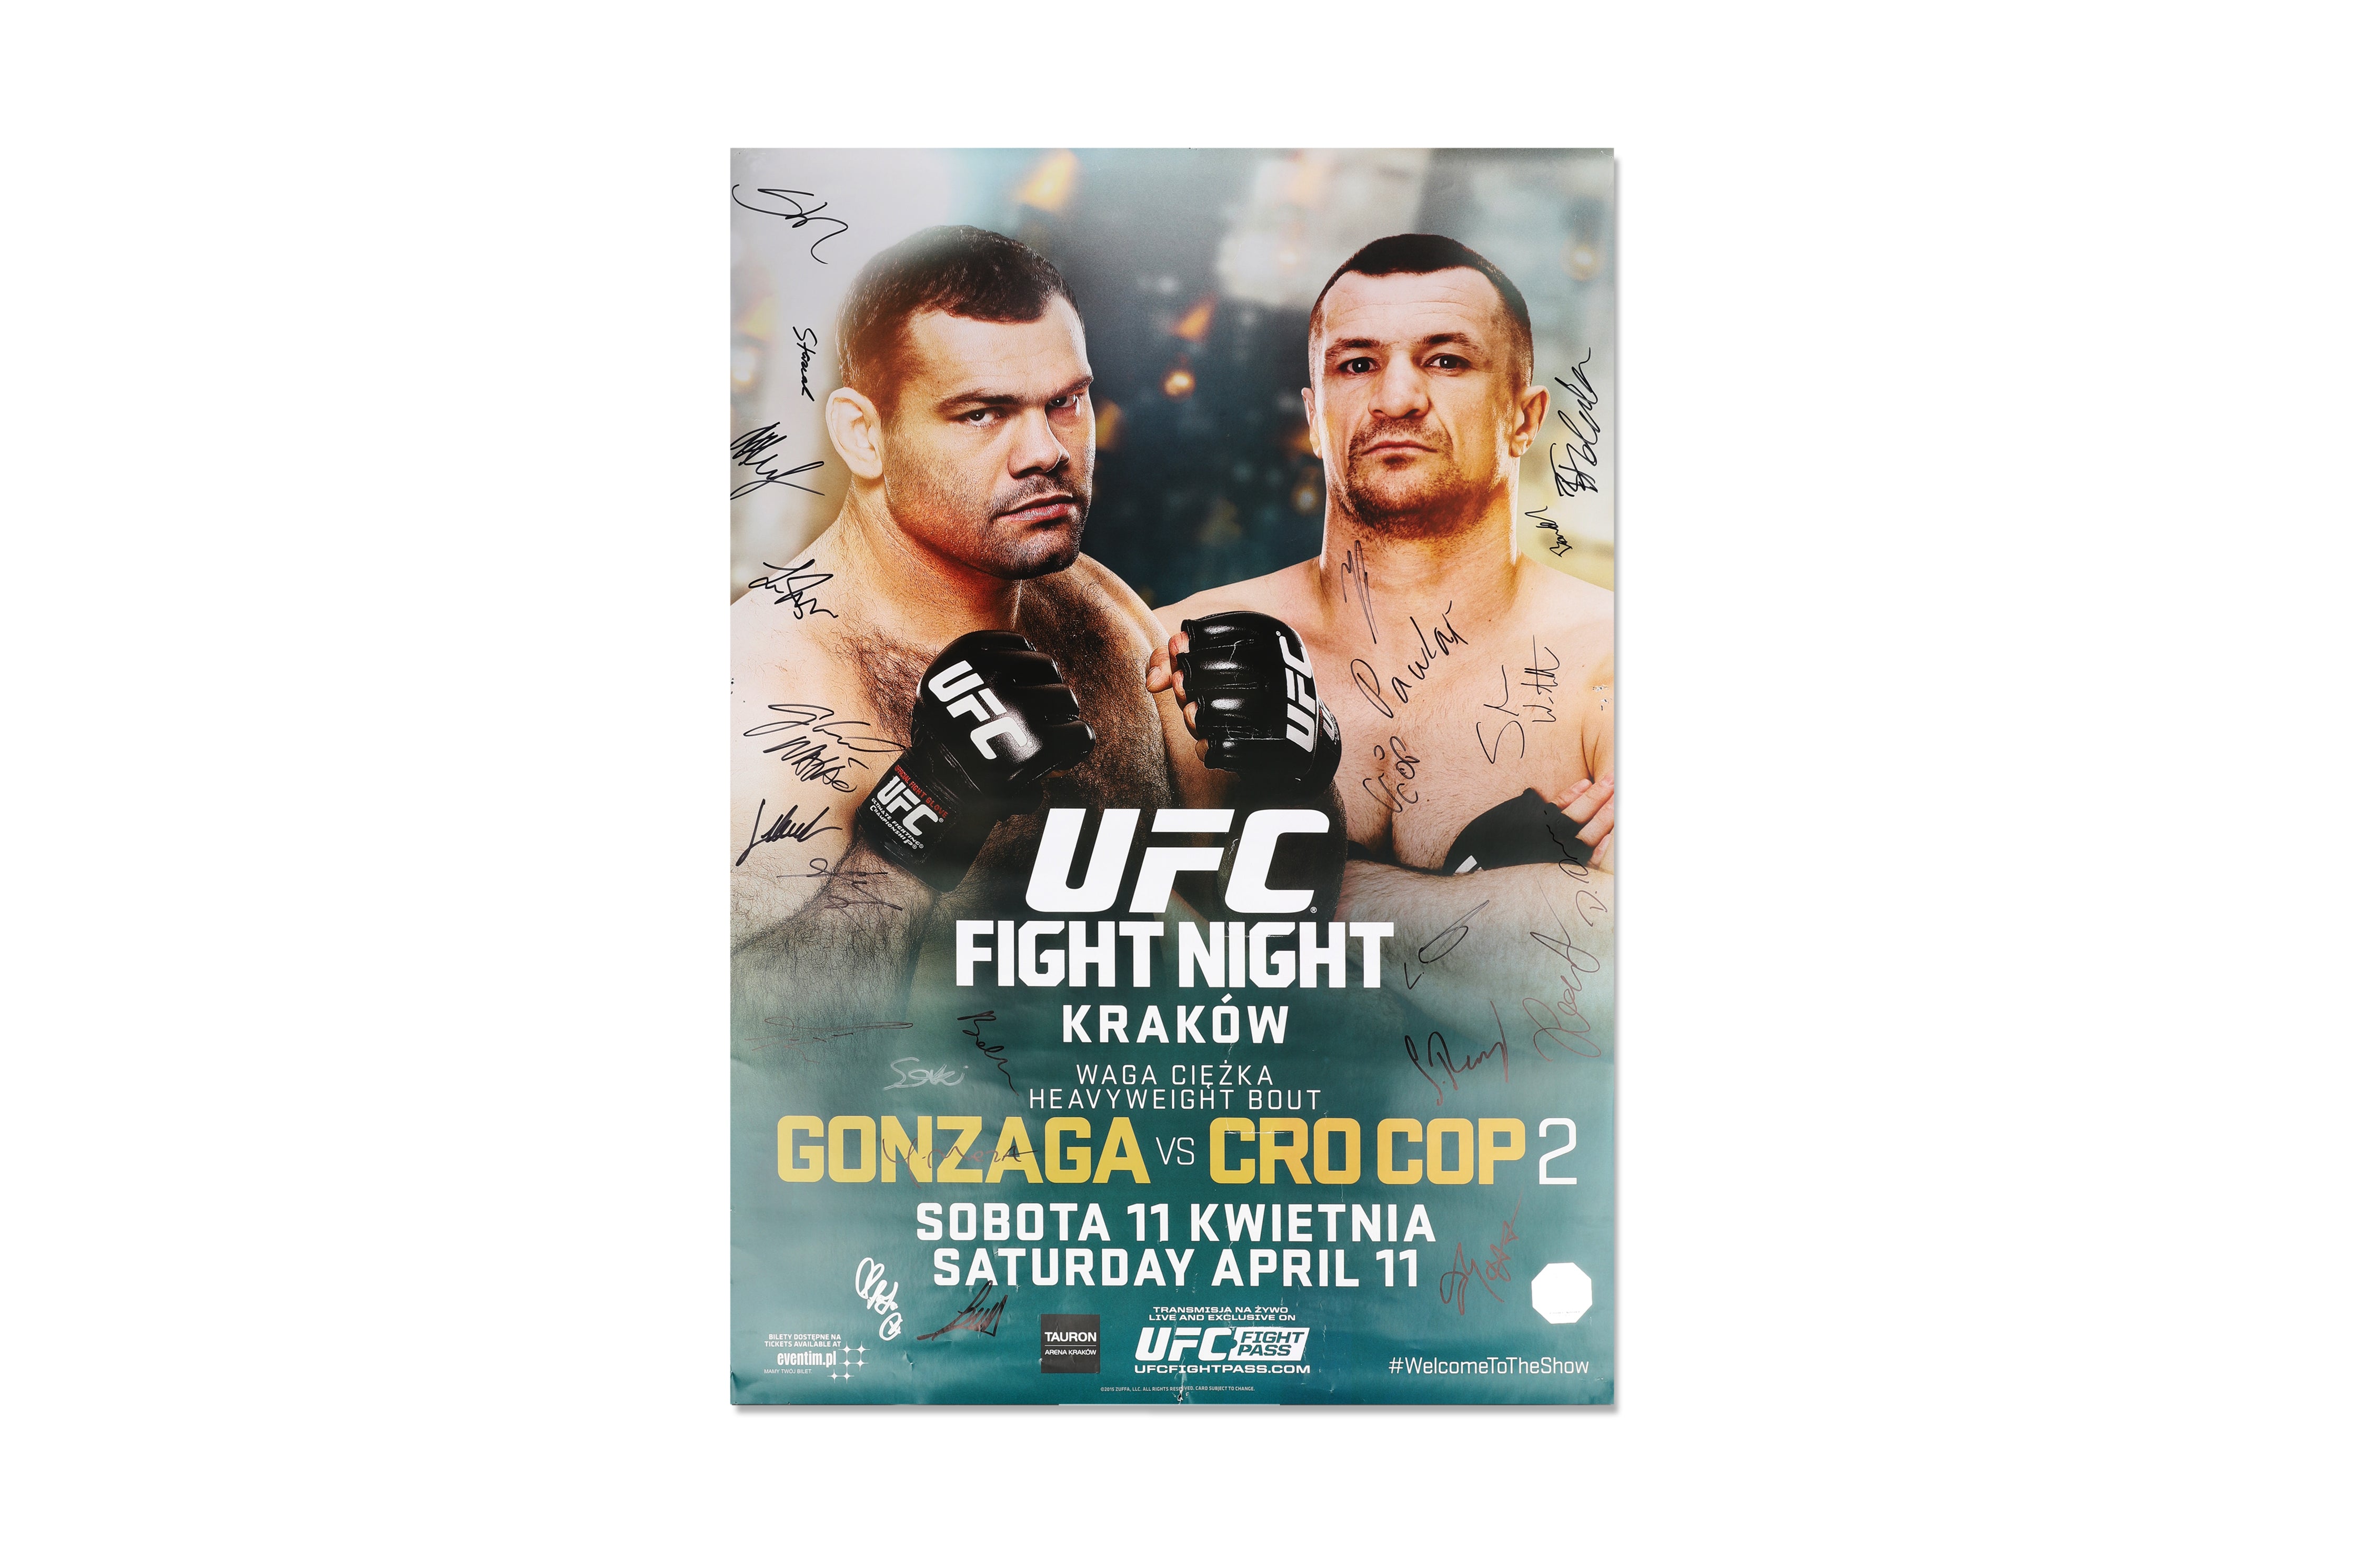 UFC Fight Night: Gonzaga vs Cro Cop 2 Autographed Event Poster